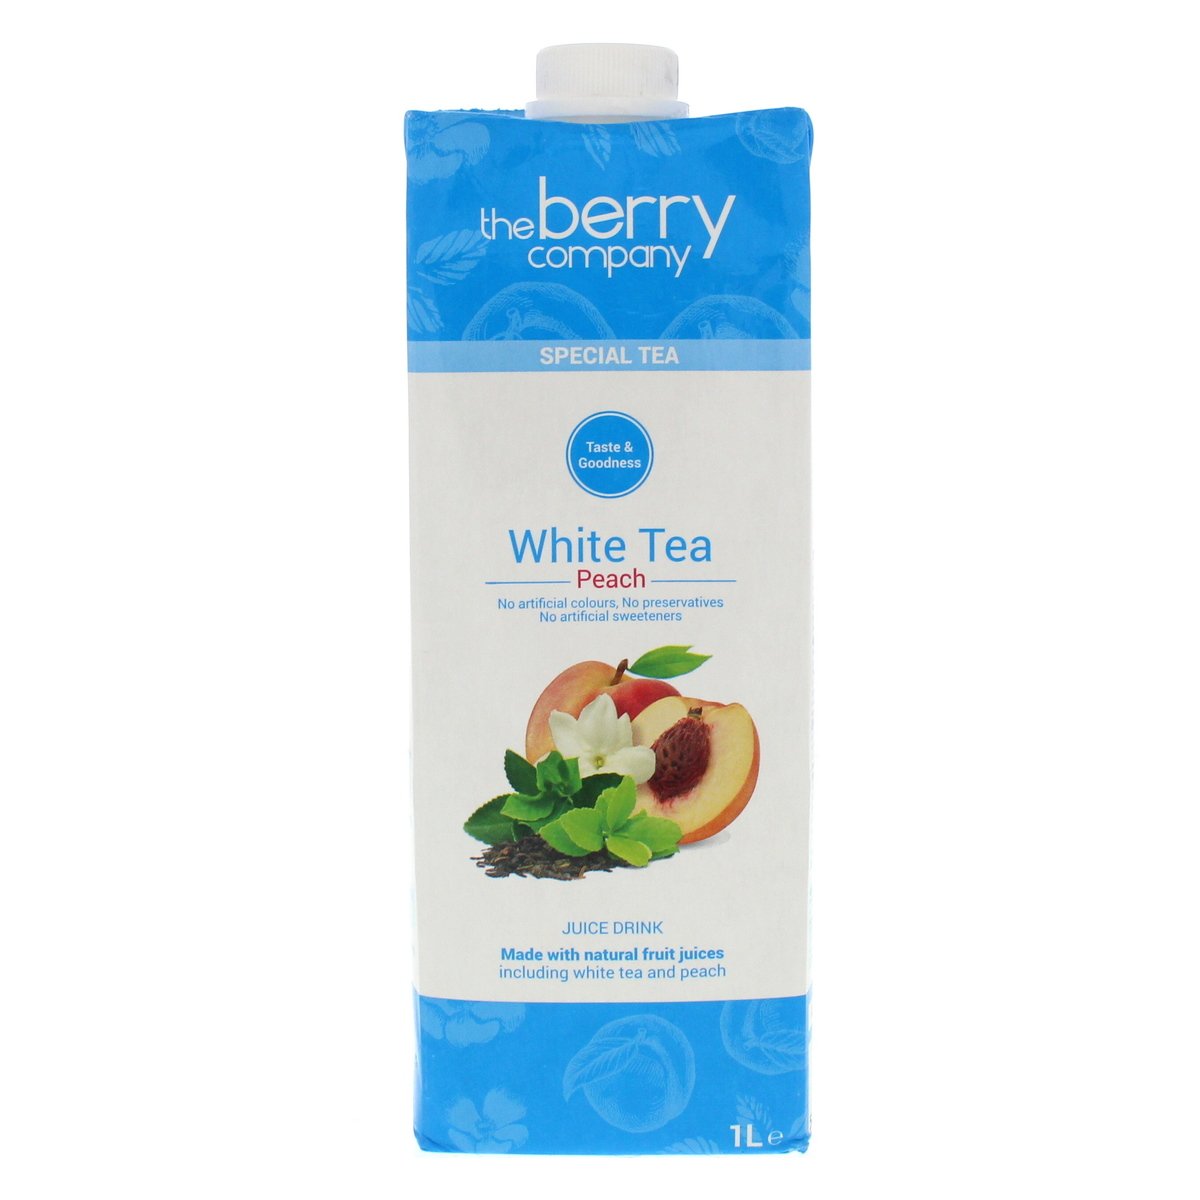 The Berry Company White Tea Peach Juice Drink 1 Litre